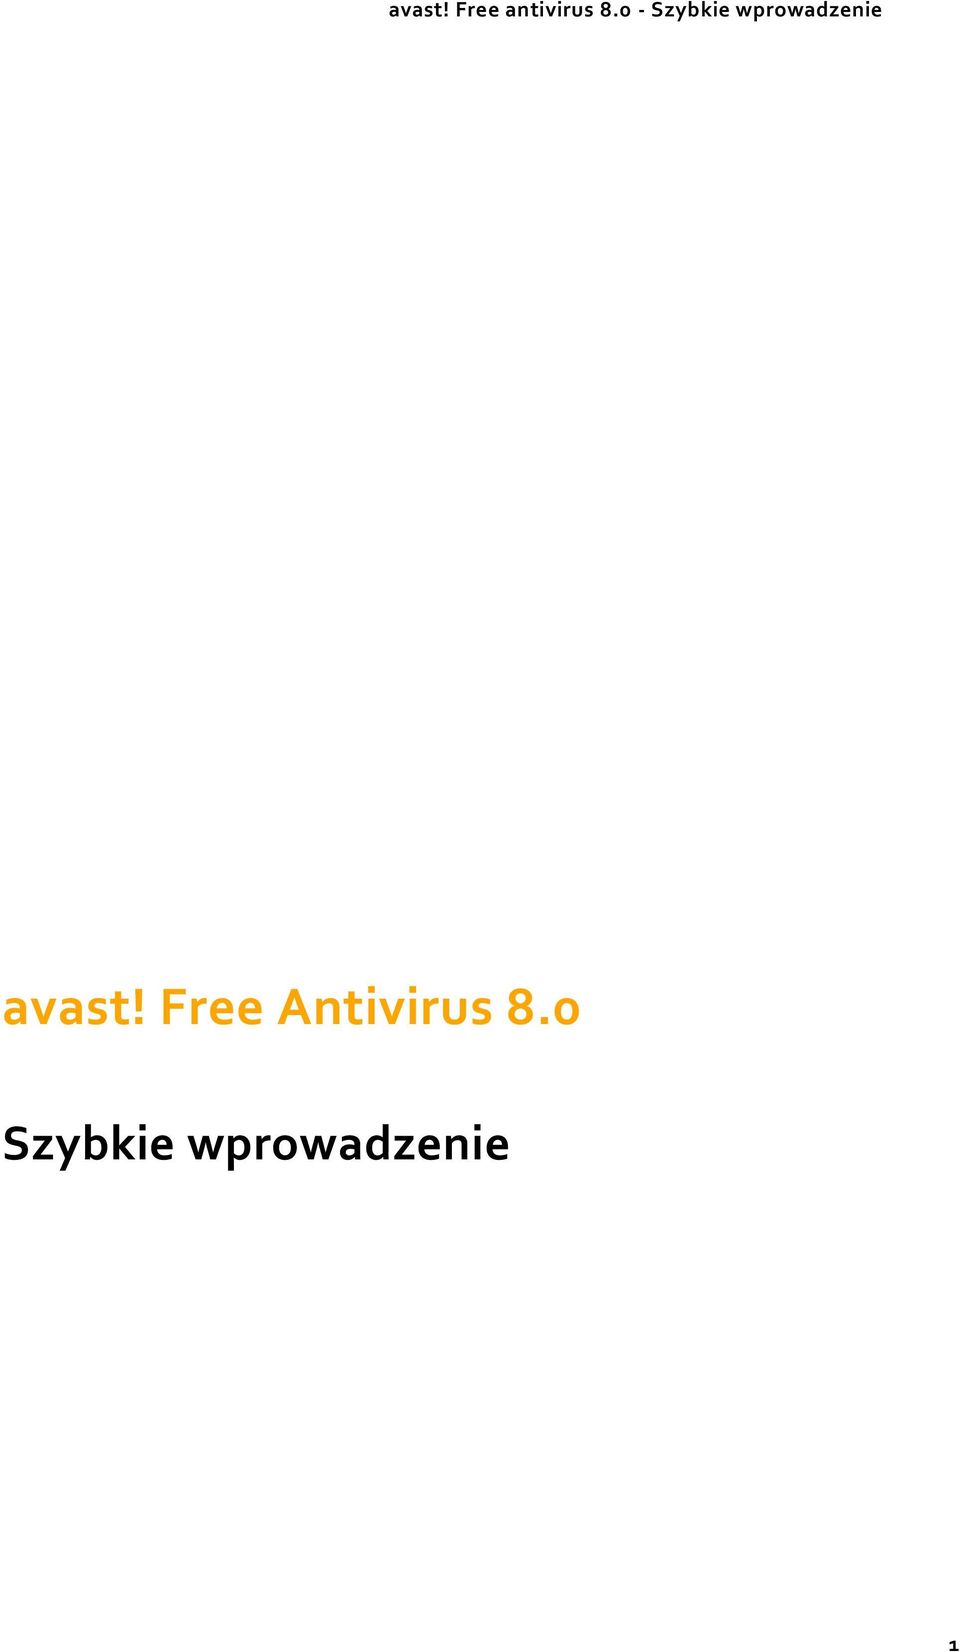 avast! Free Antivirus 8.